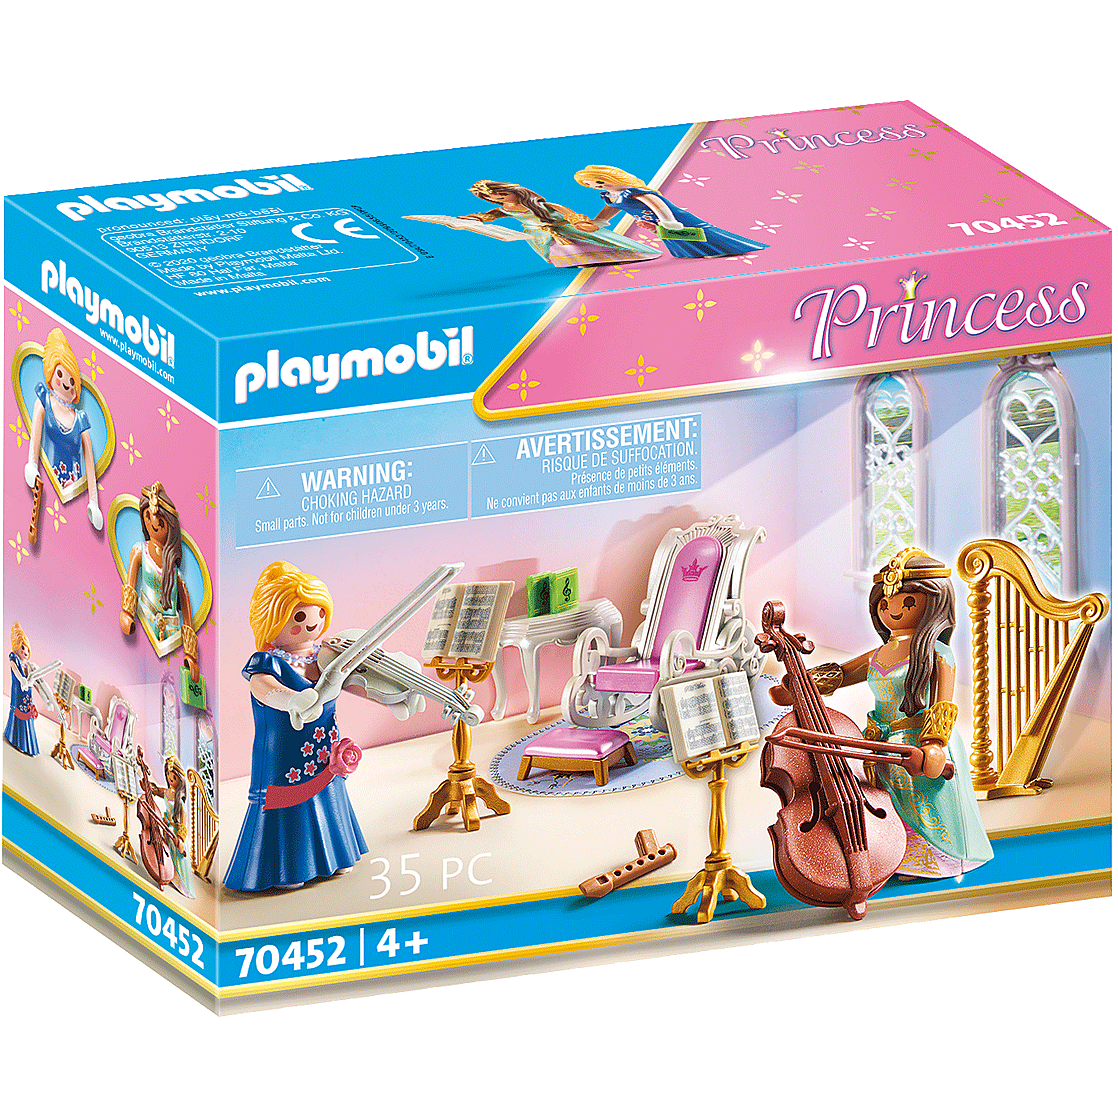 Playmobil Princess 70448 Château des princesses - Playmobil